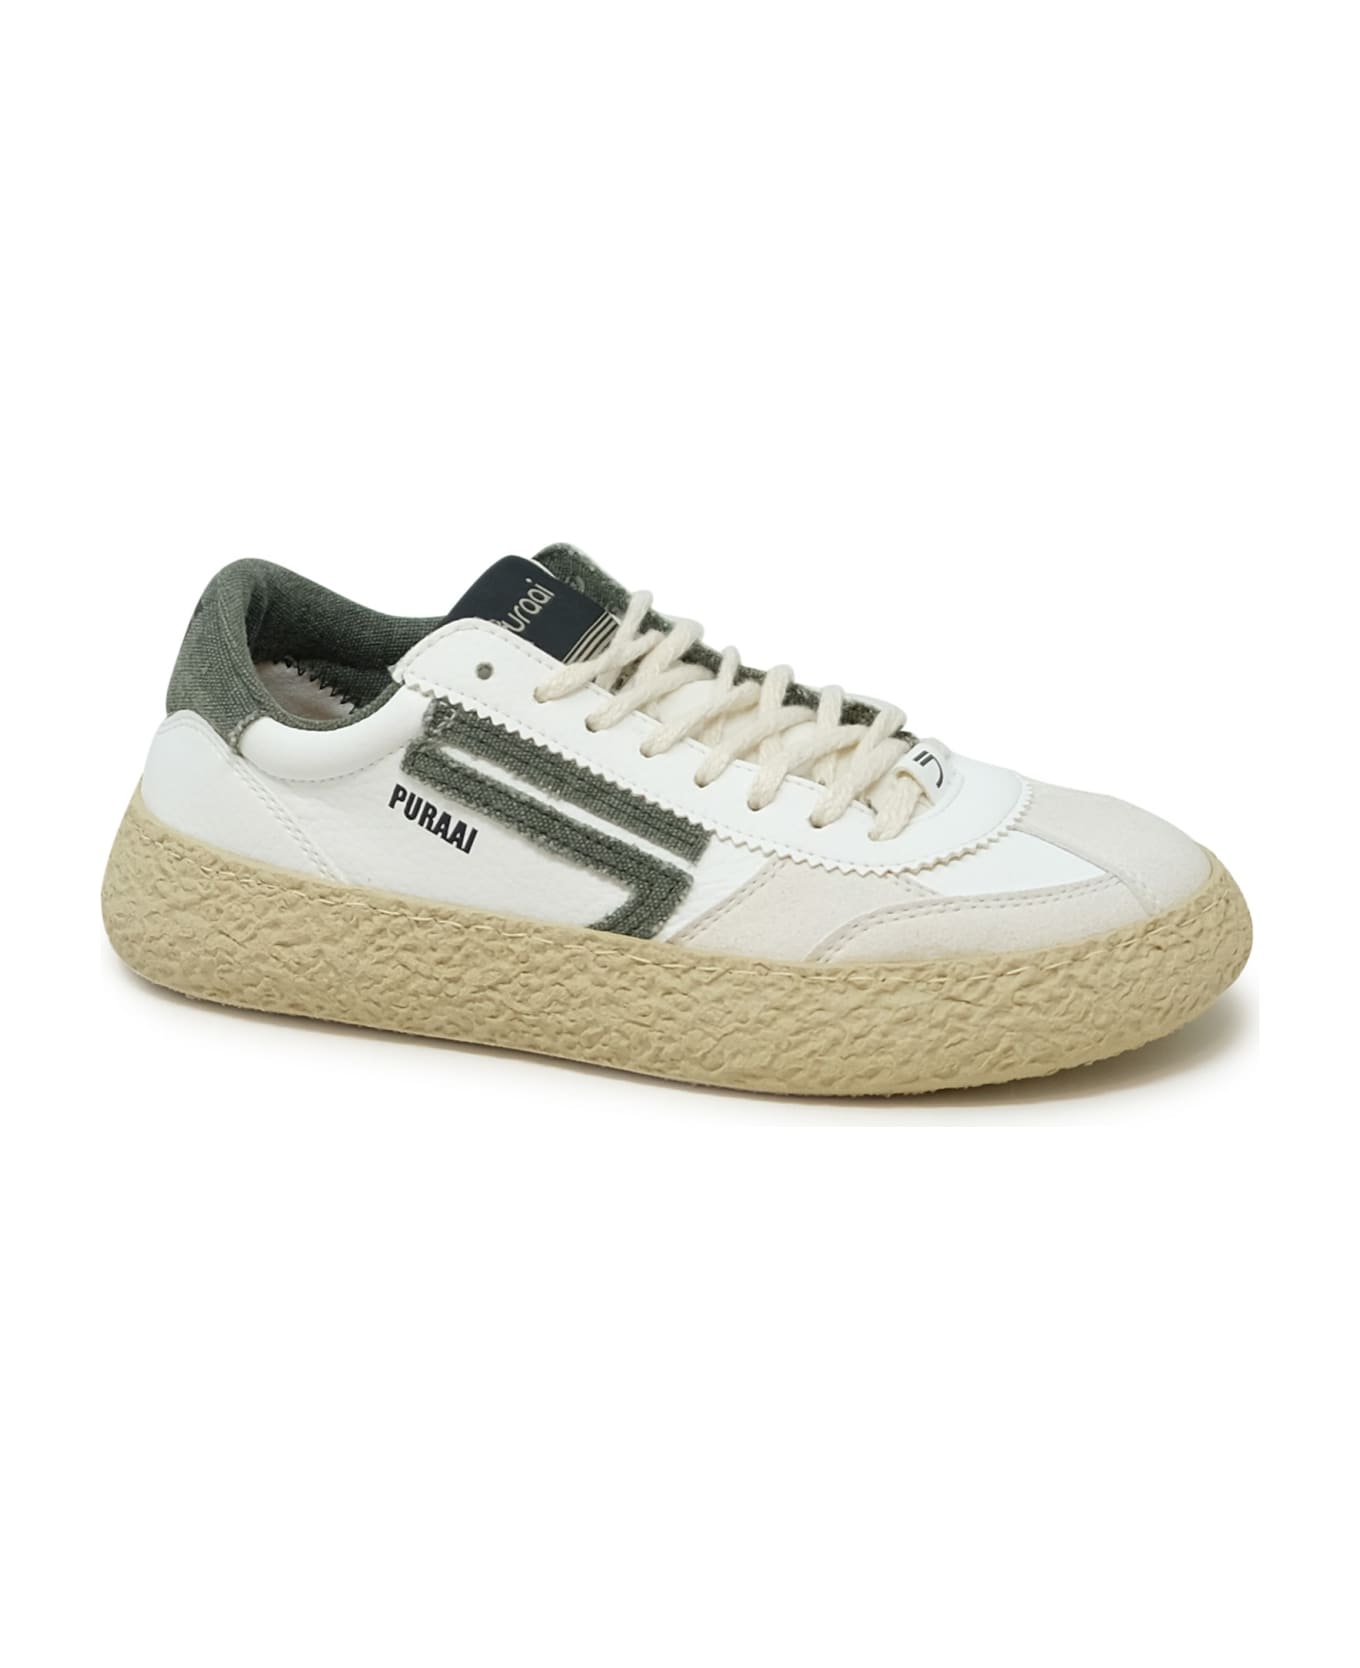 Puraai 1.01 Classic White And Green Vegan Leather Sneakers - WHITE スニーカー